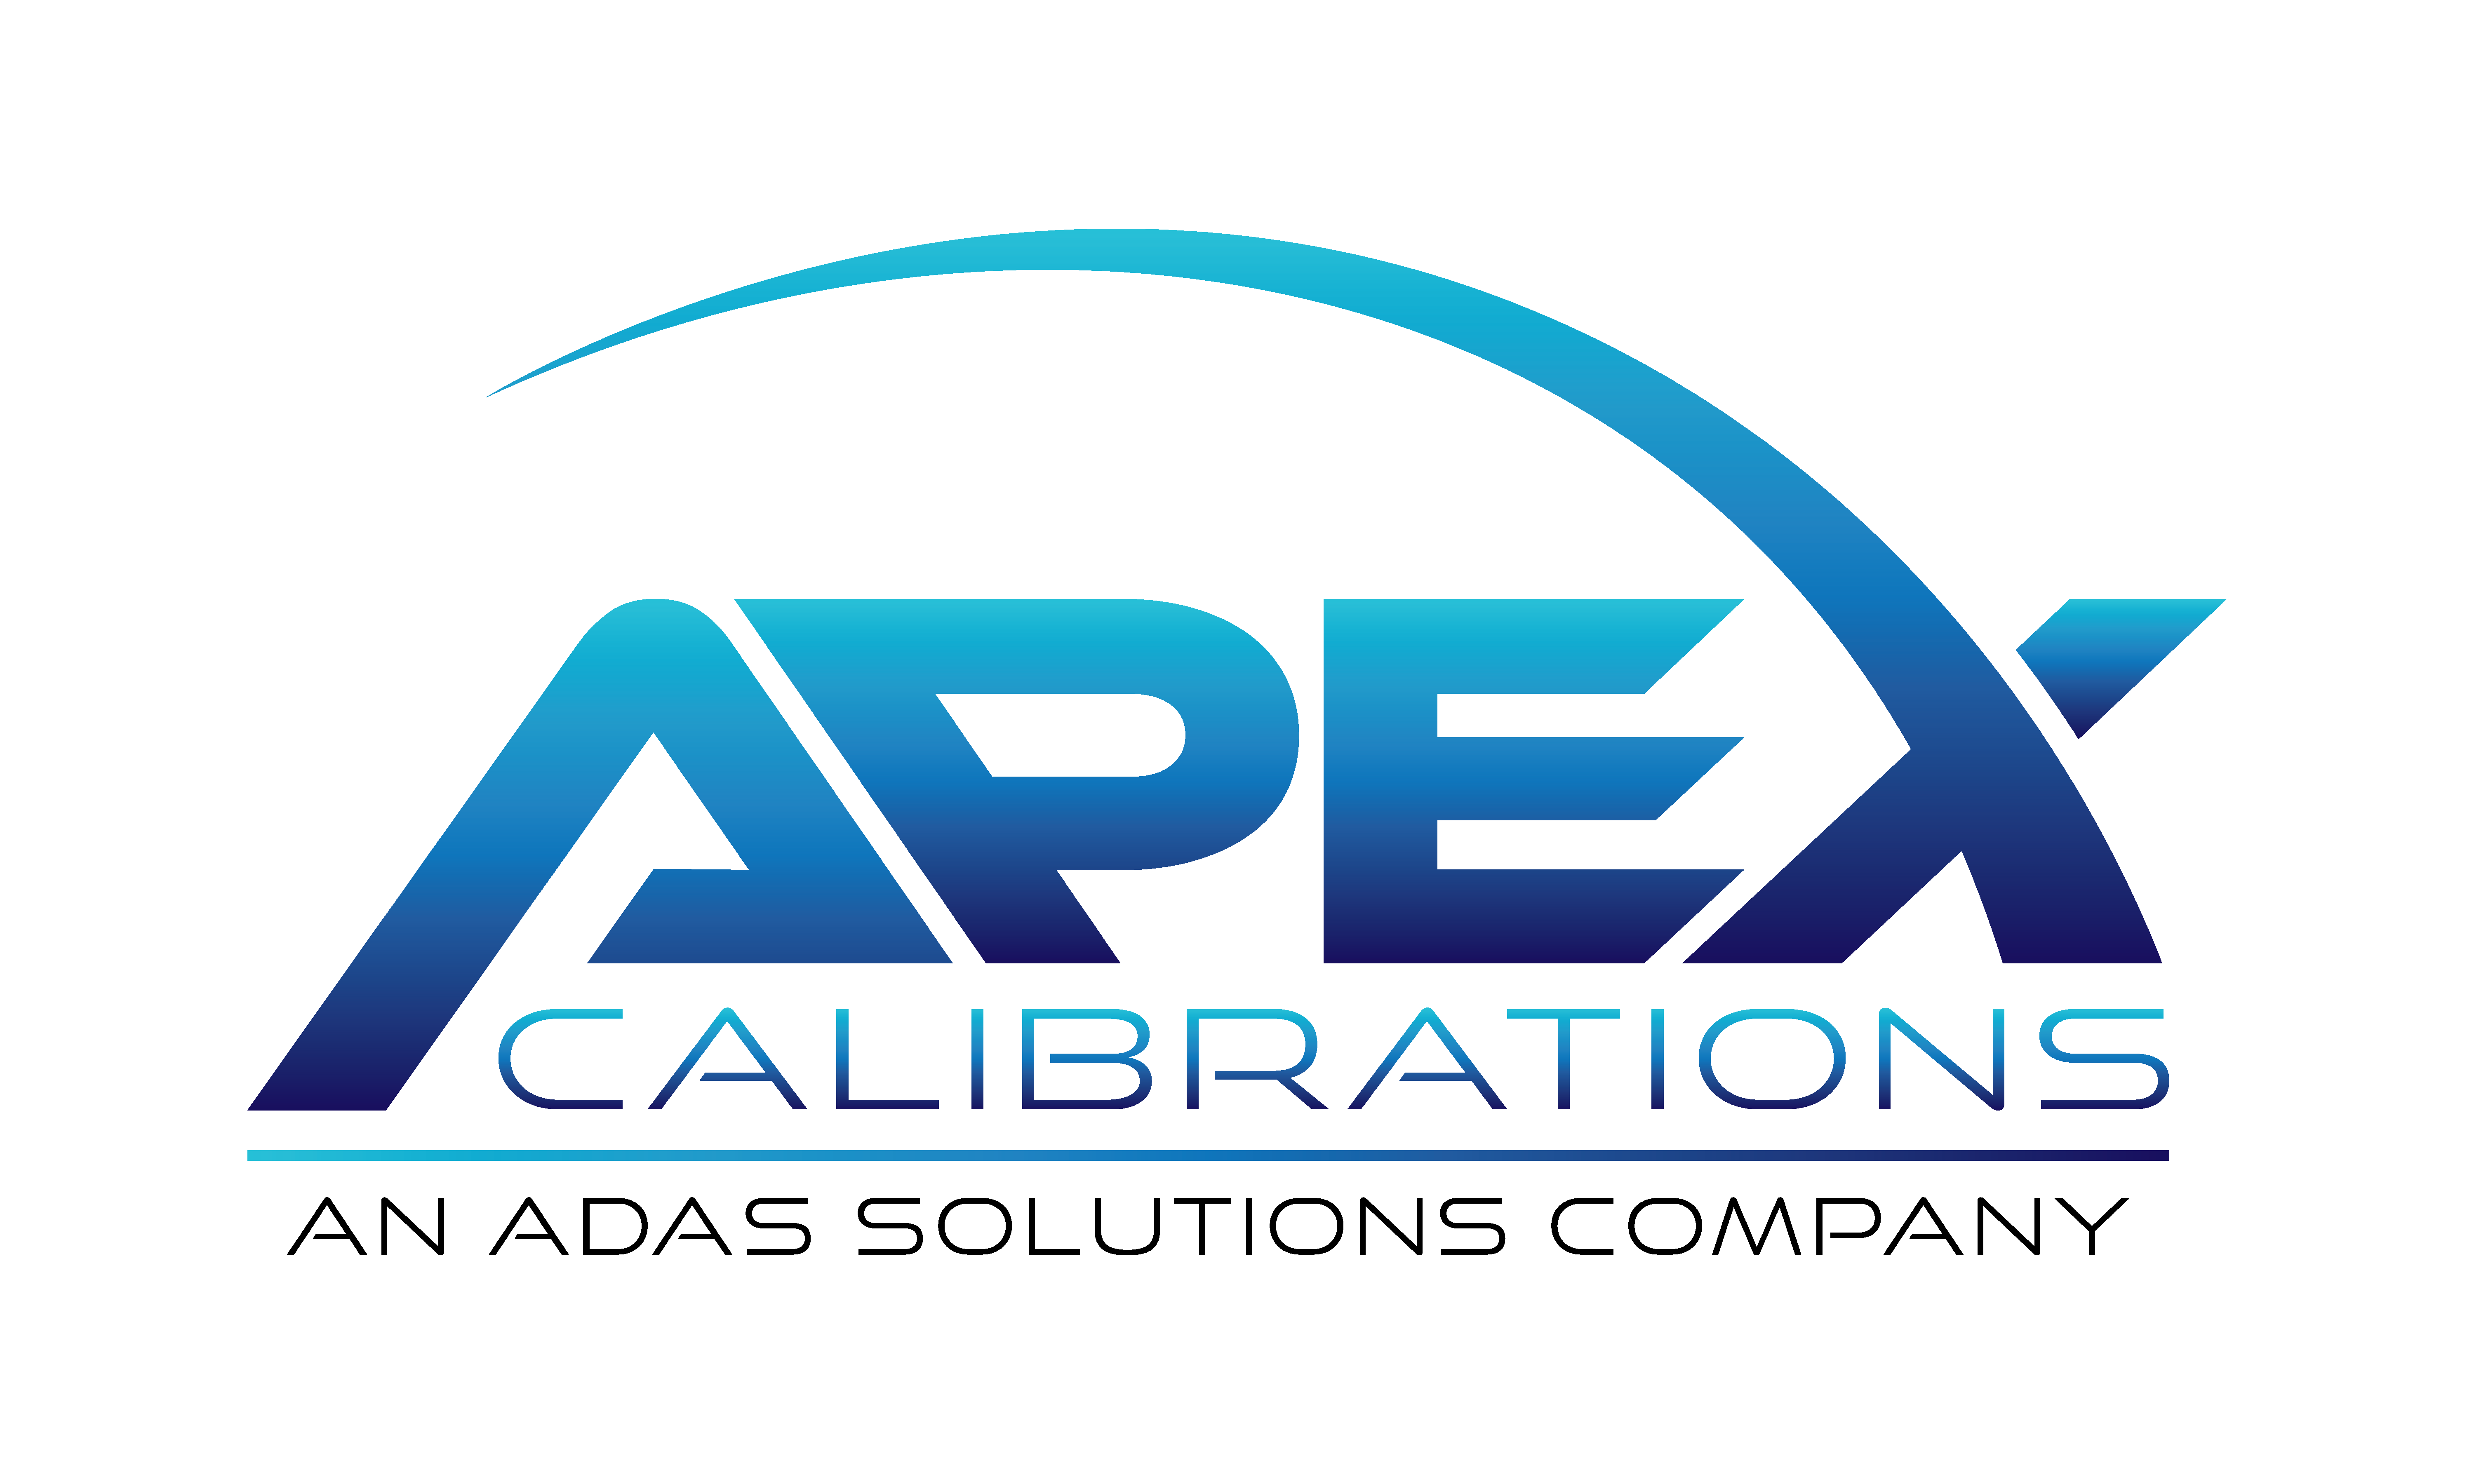 Apex Calibration company logo